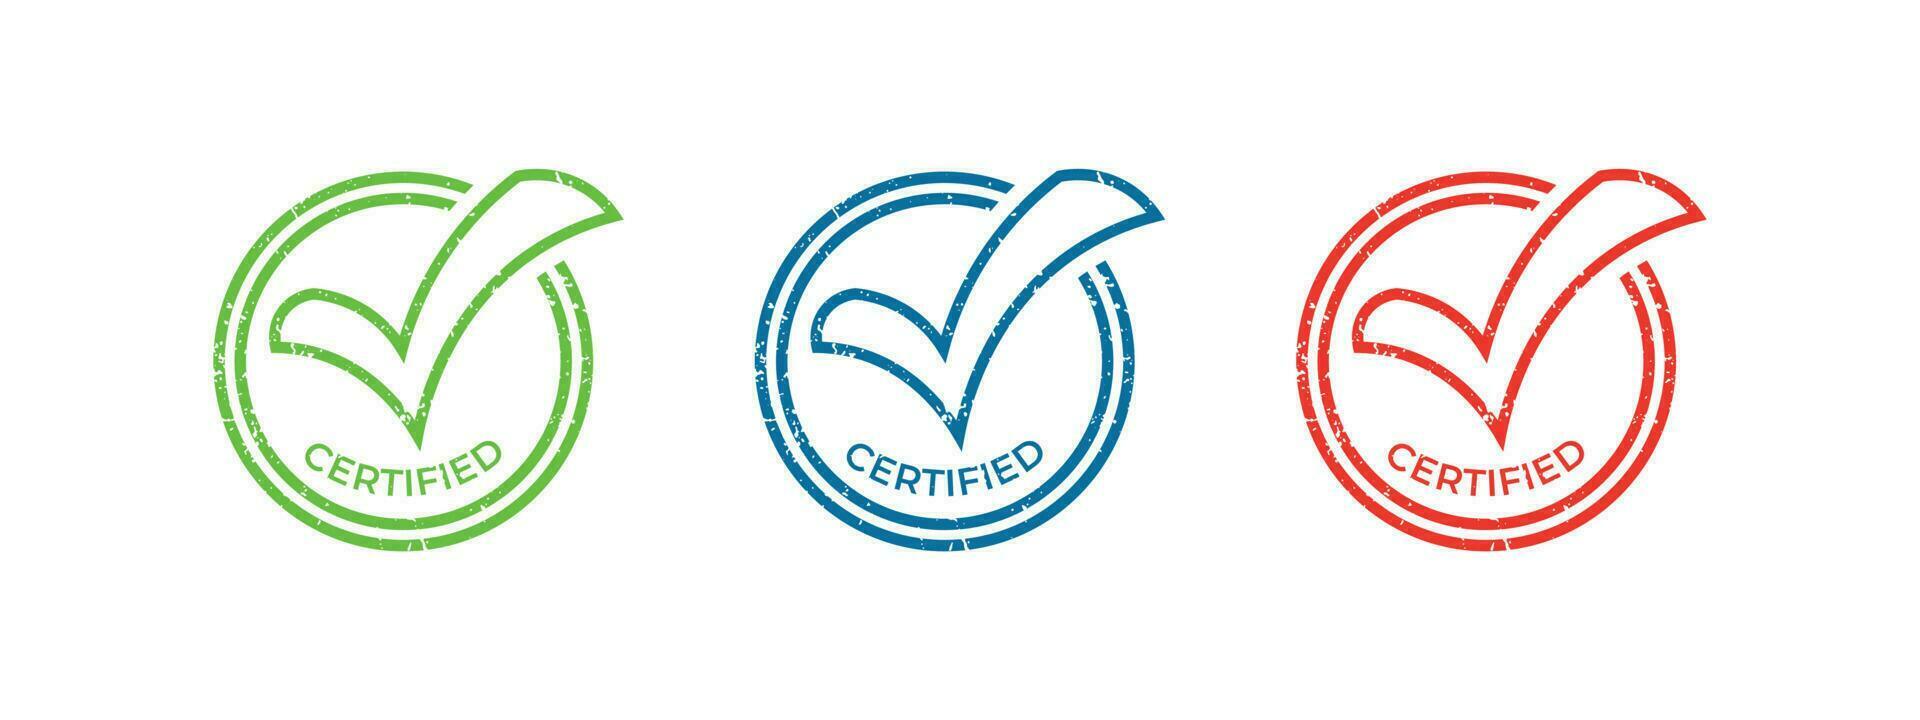 Set of certification stamps vector